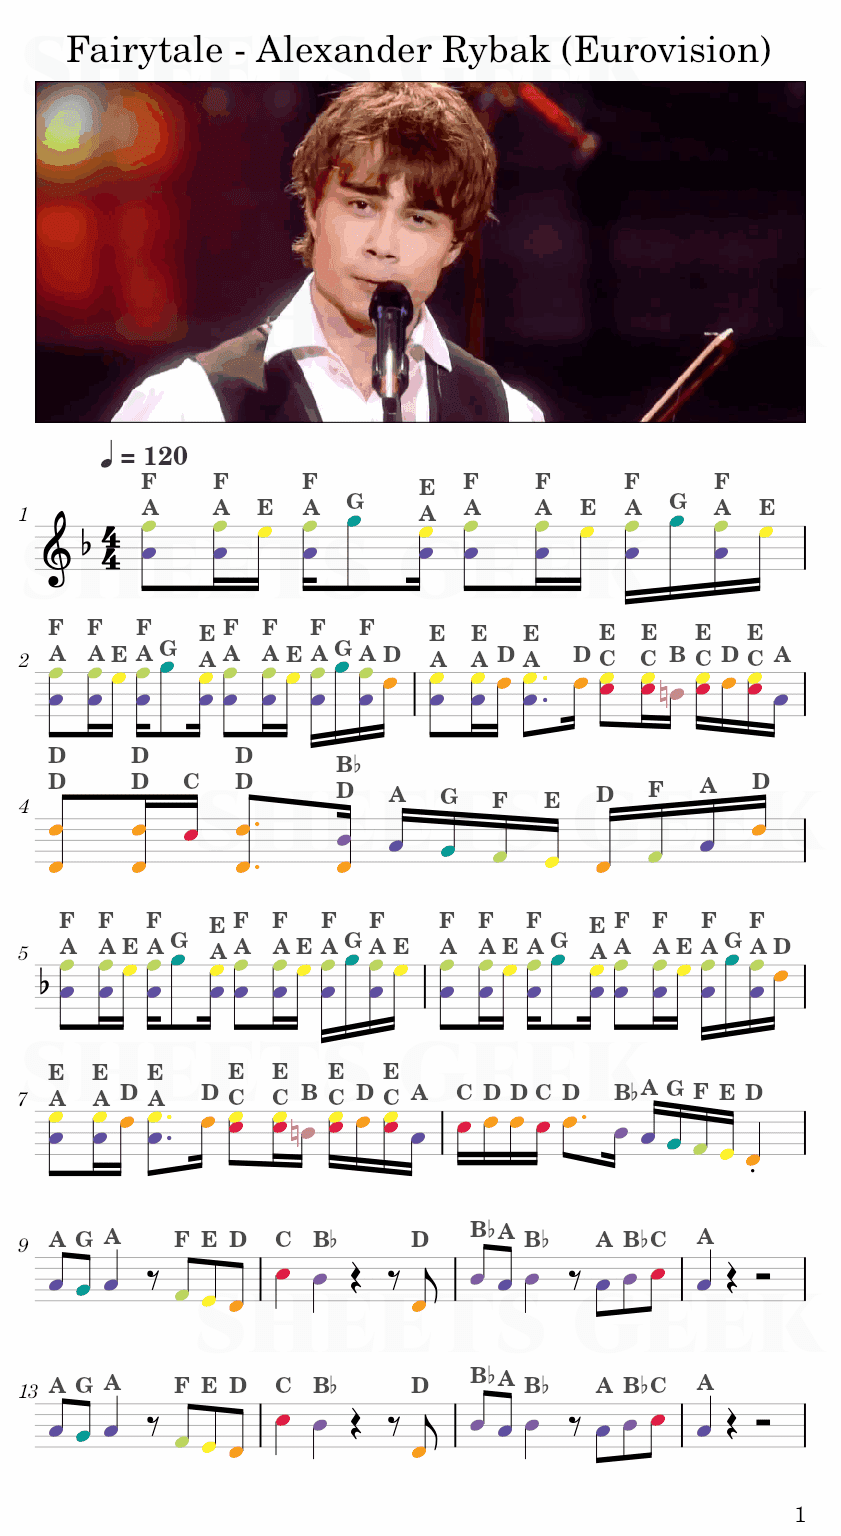 Fairytale - Alexander Rybak (Eurovision) Easy Sheet Music Free for piano, keyboard, flute, violin, sax, cello page 1